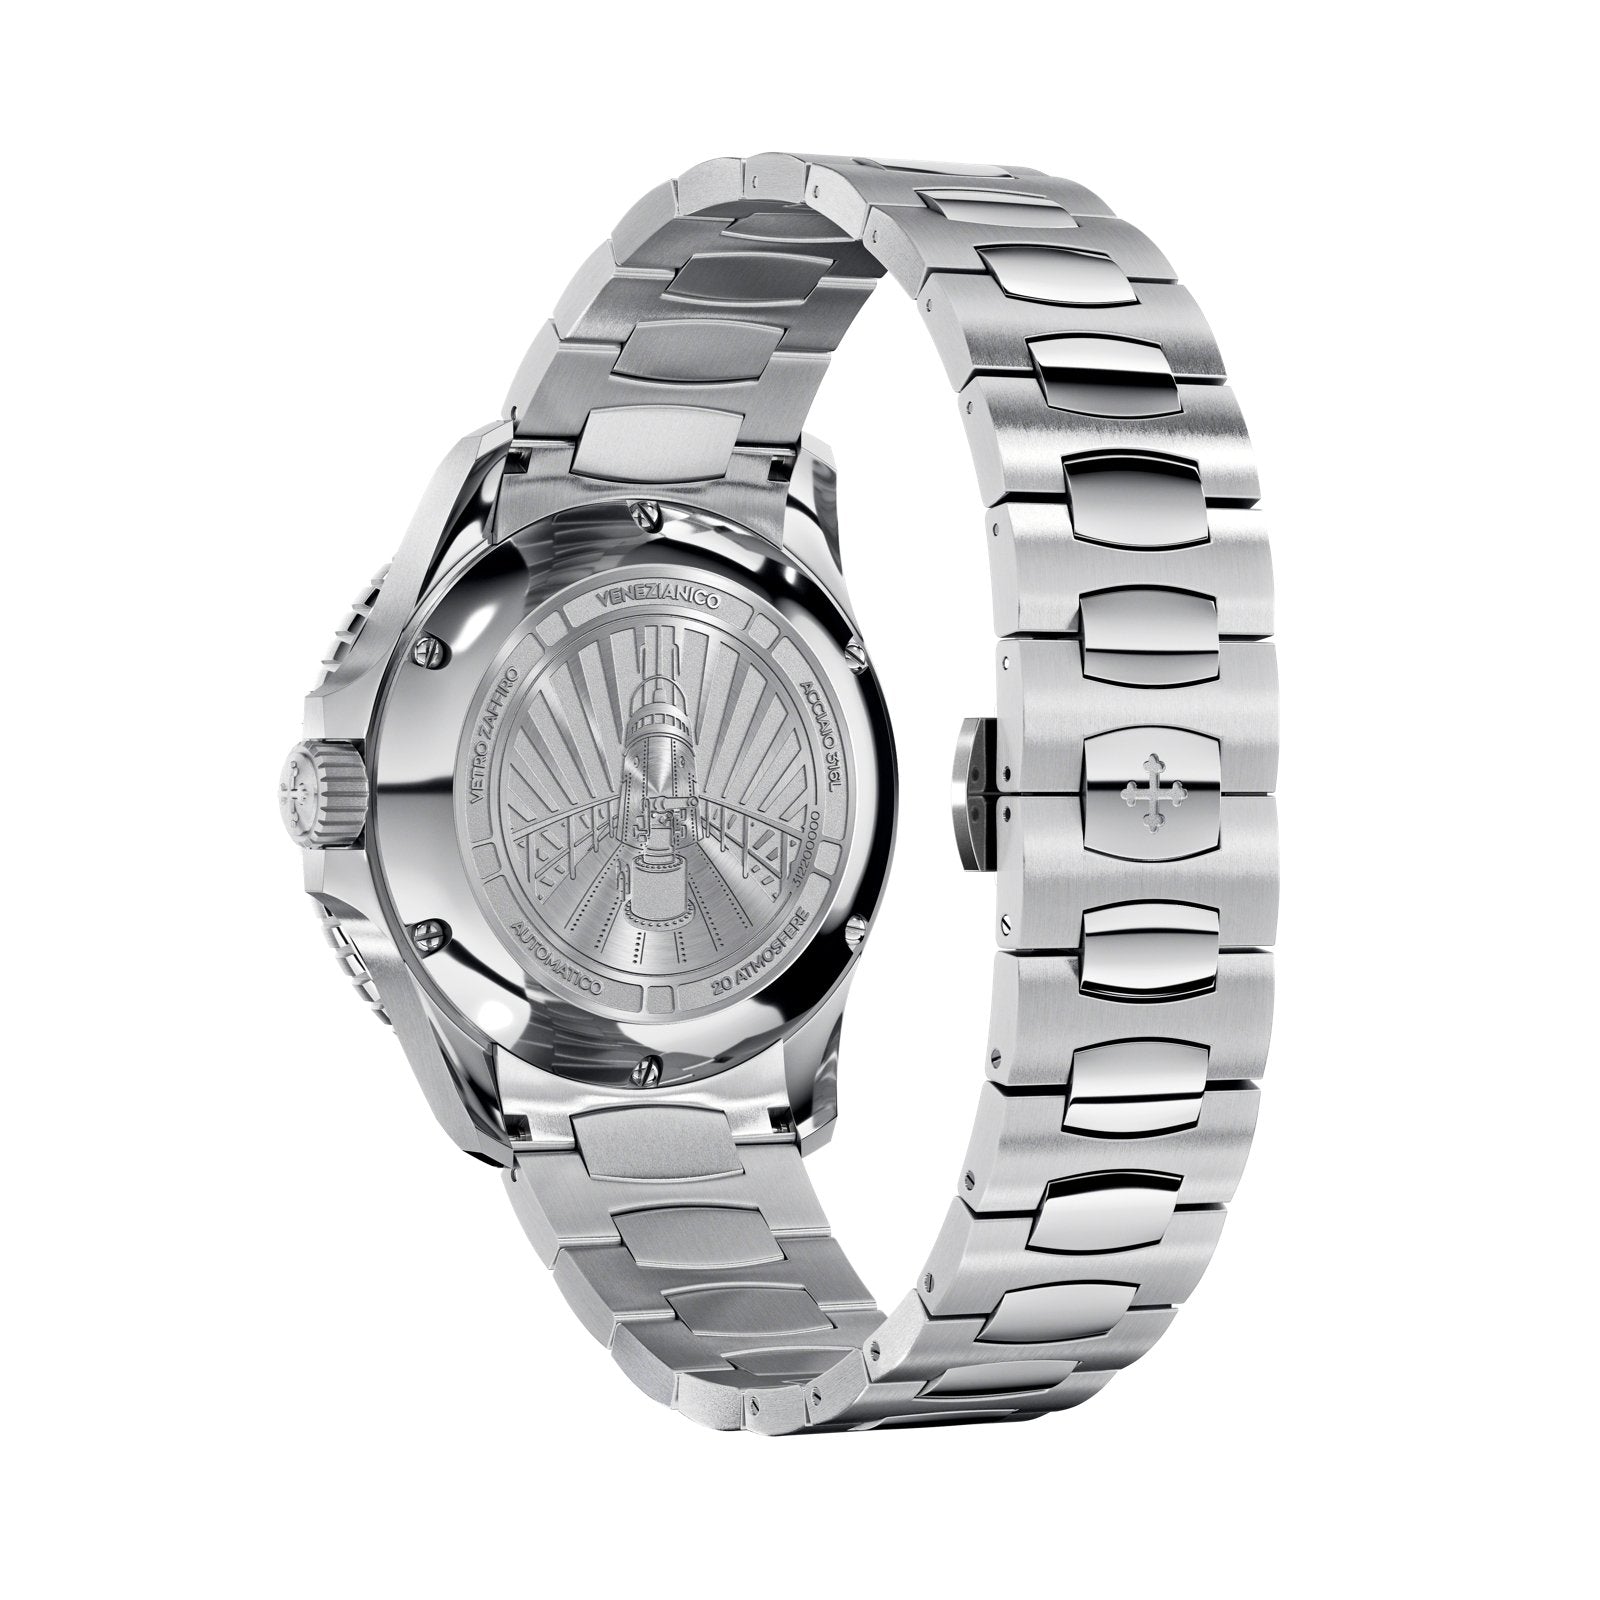 Venezianico Automatic Watch Nereide 39 Canova Bracelet Blue 3121502C - Watches & Crystals